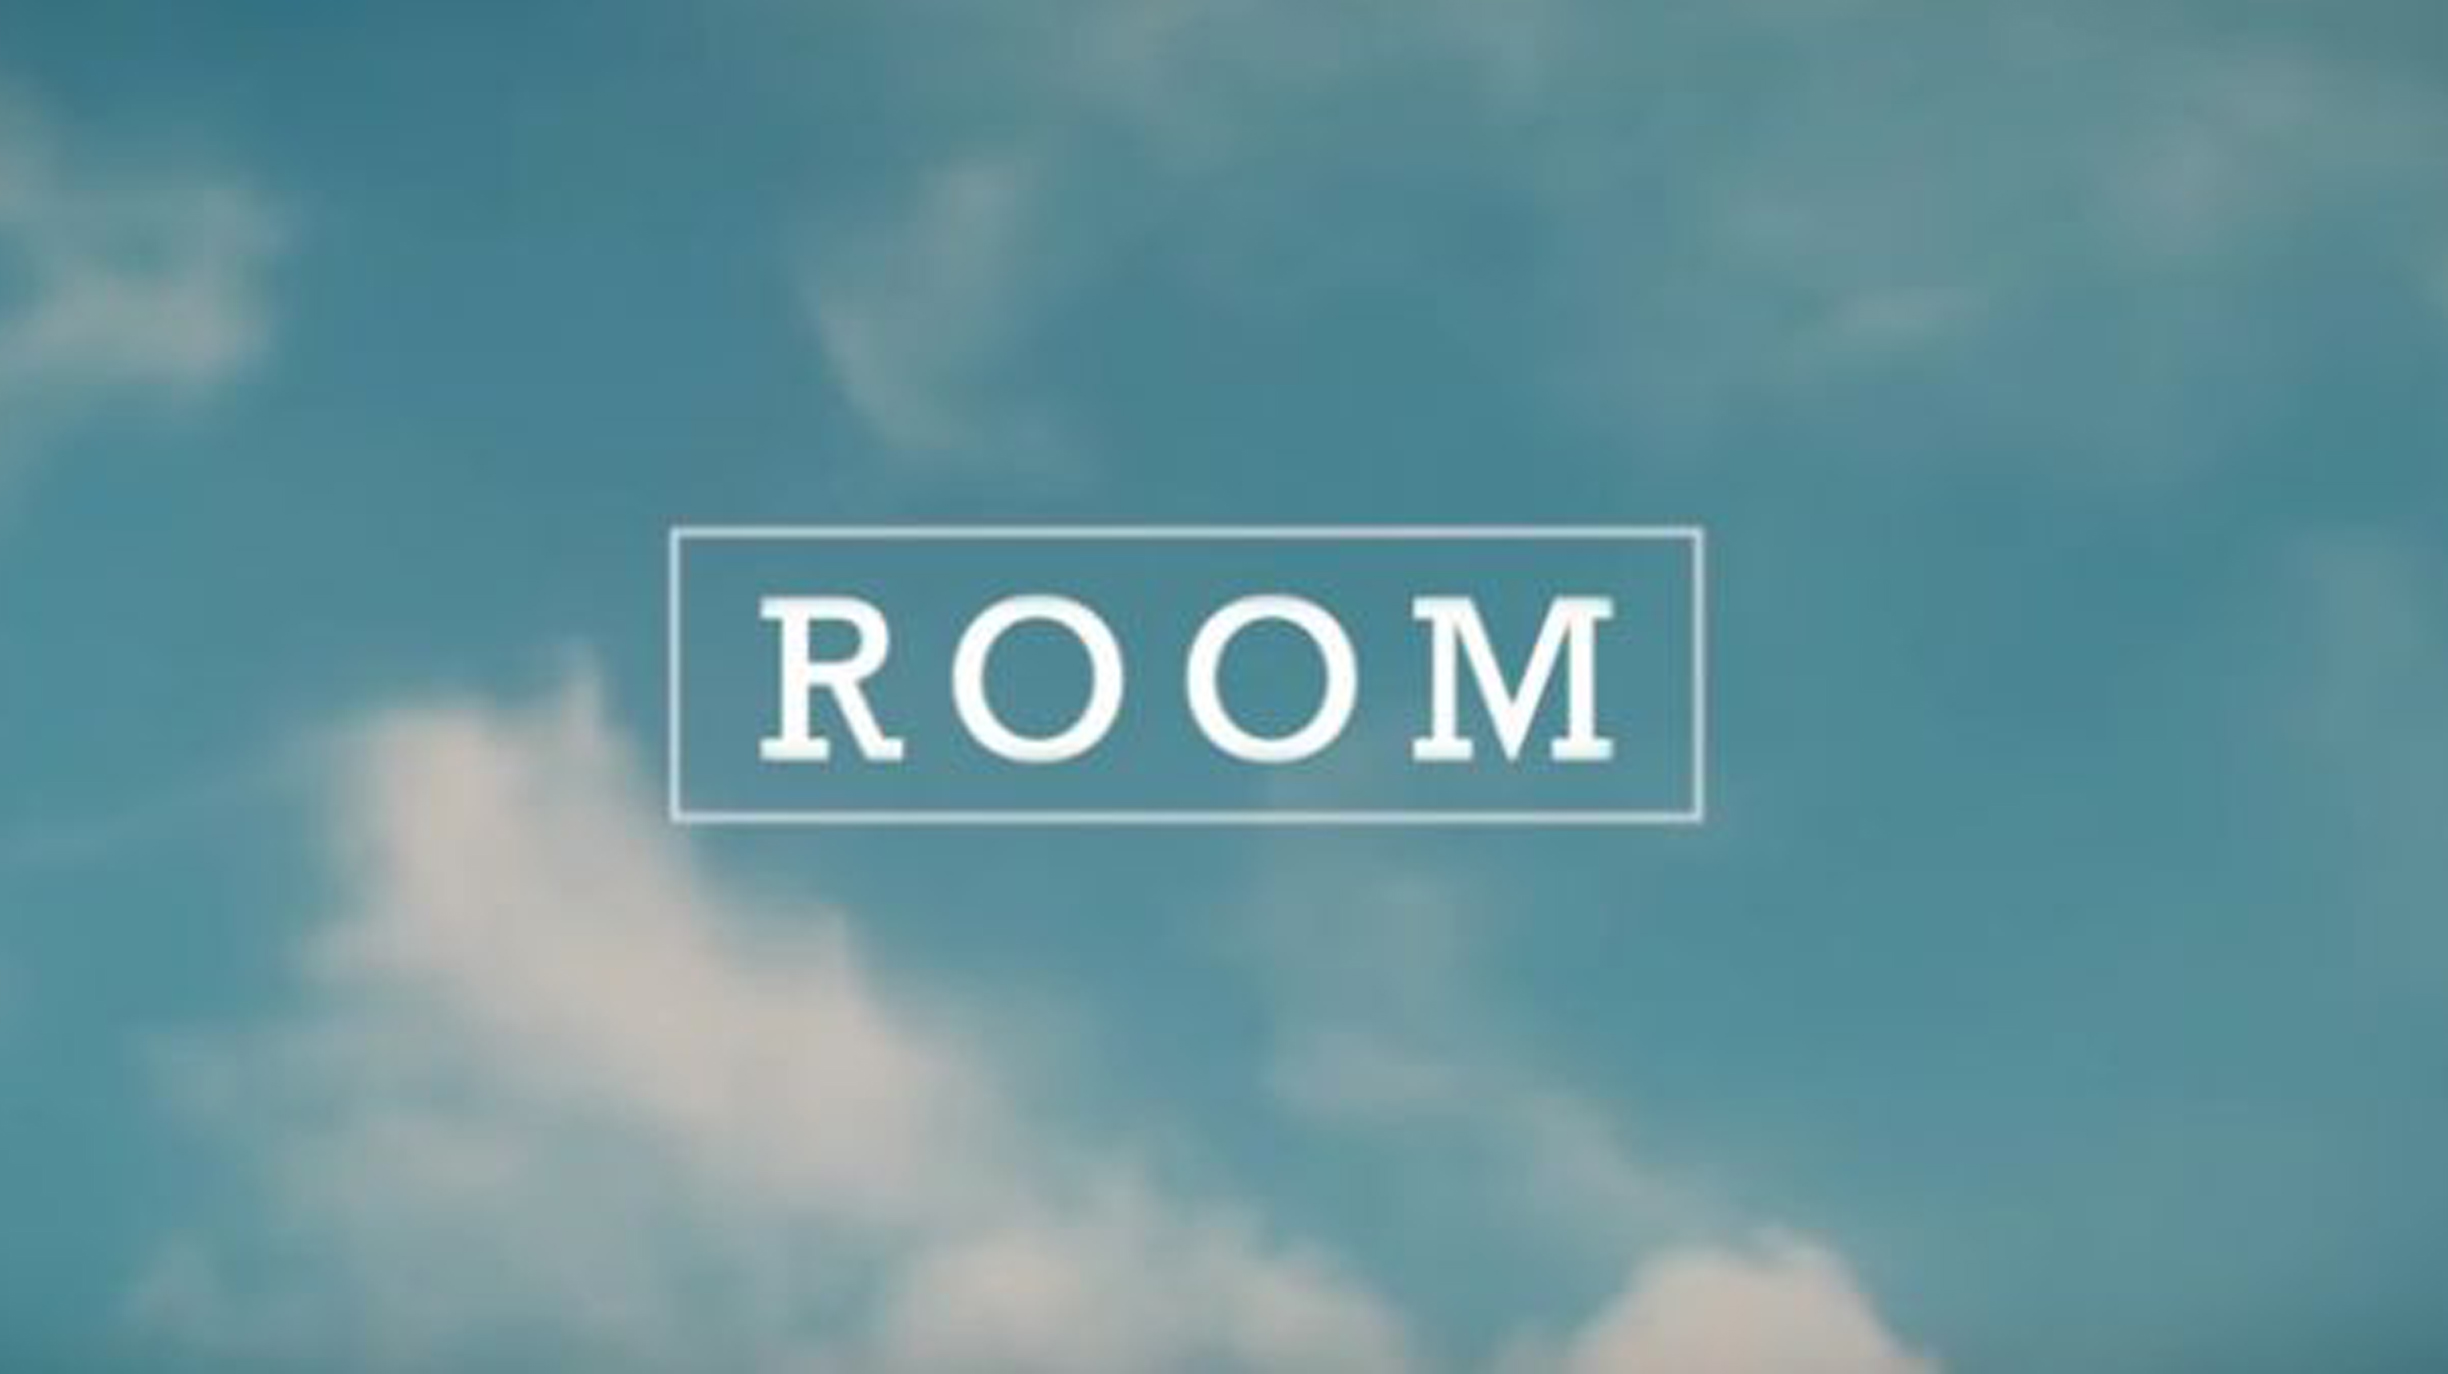 Le mercredi c’est cinéma : “Room”